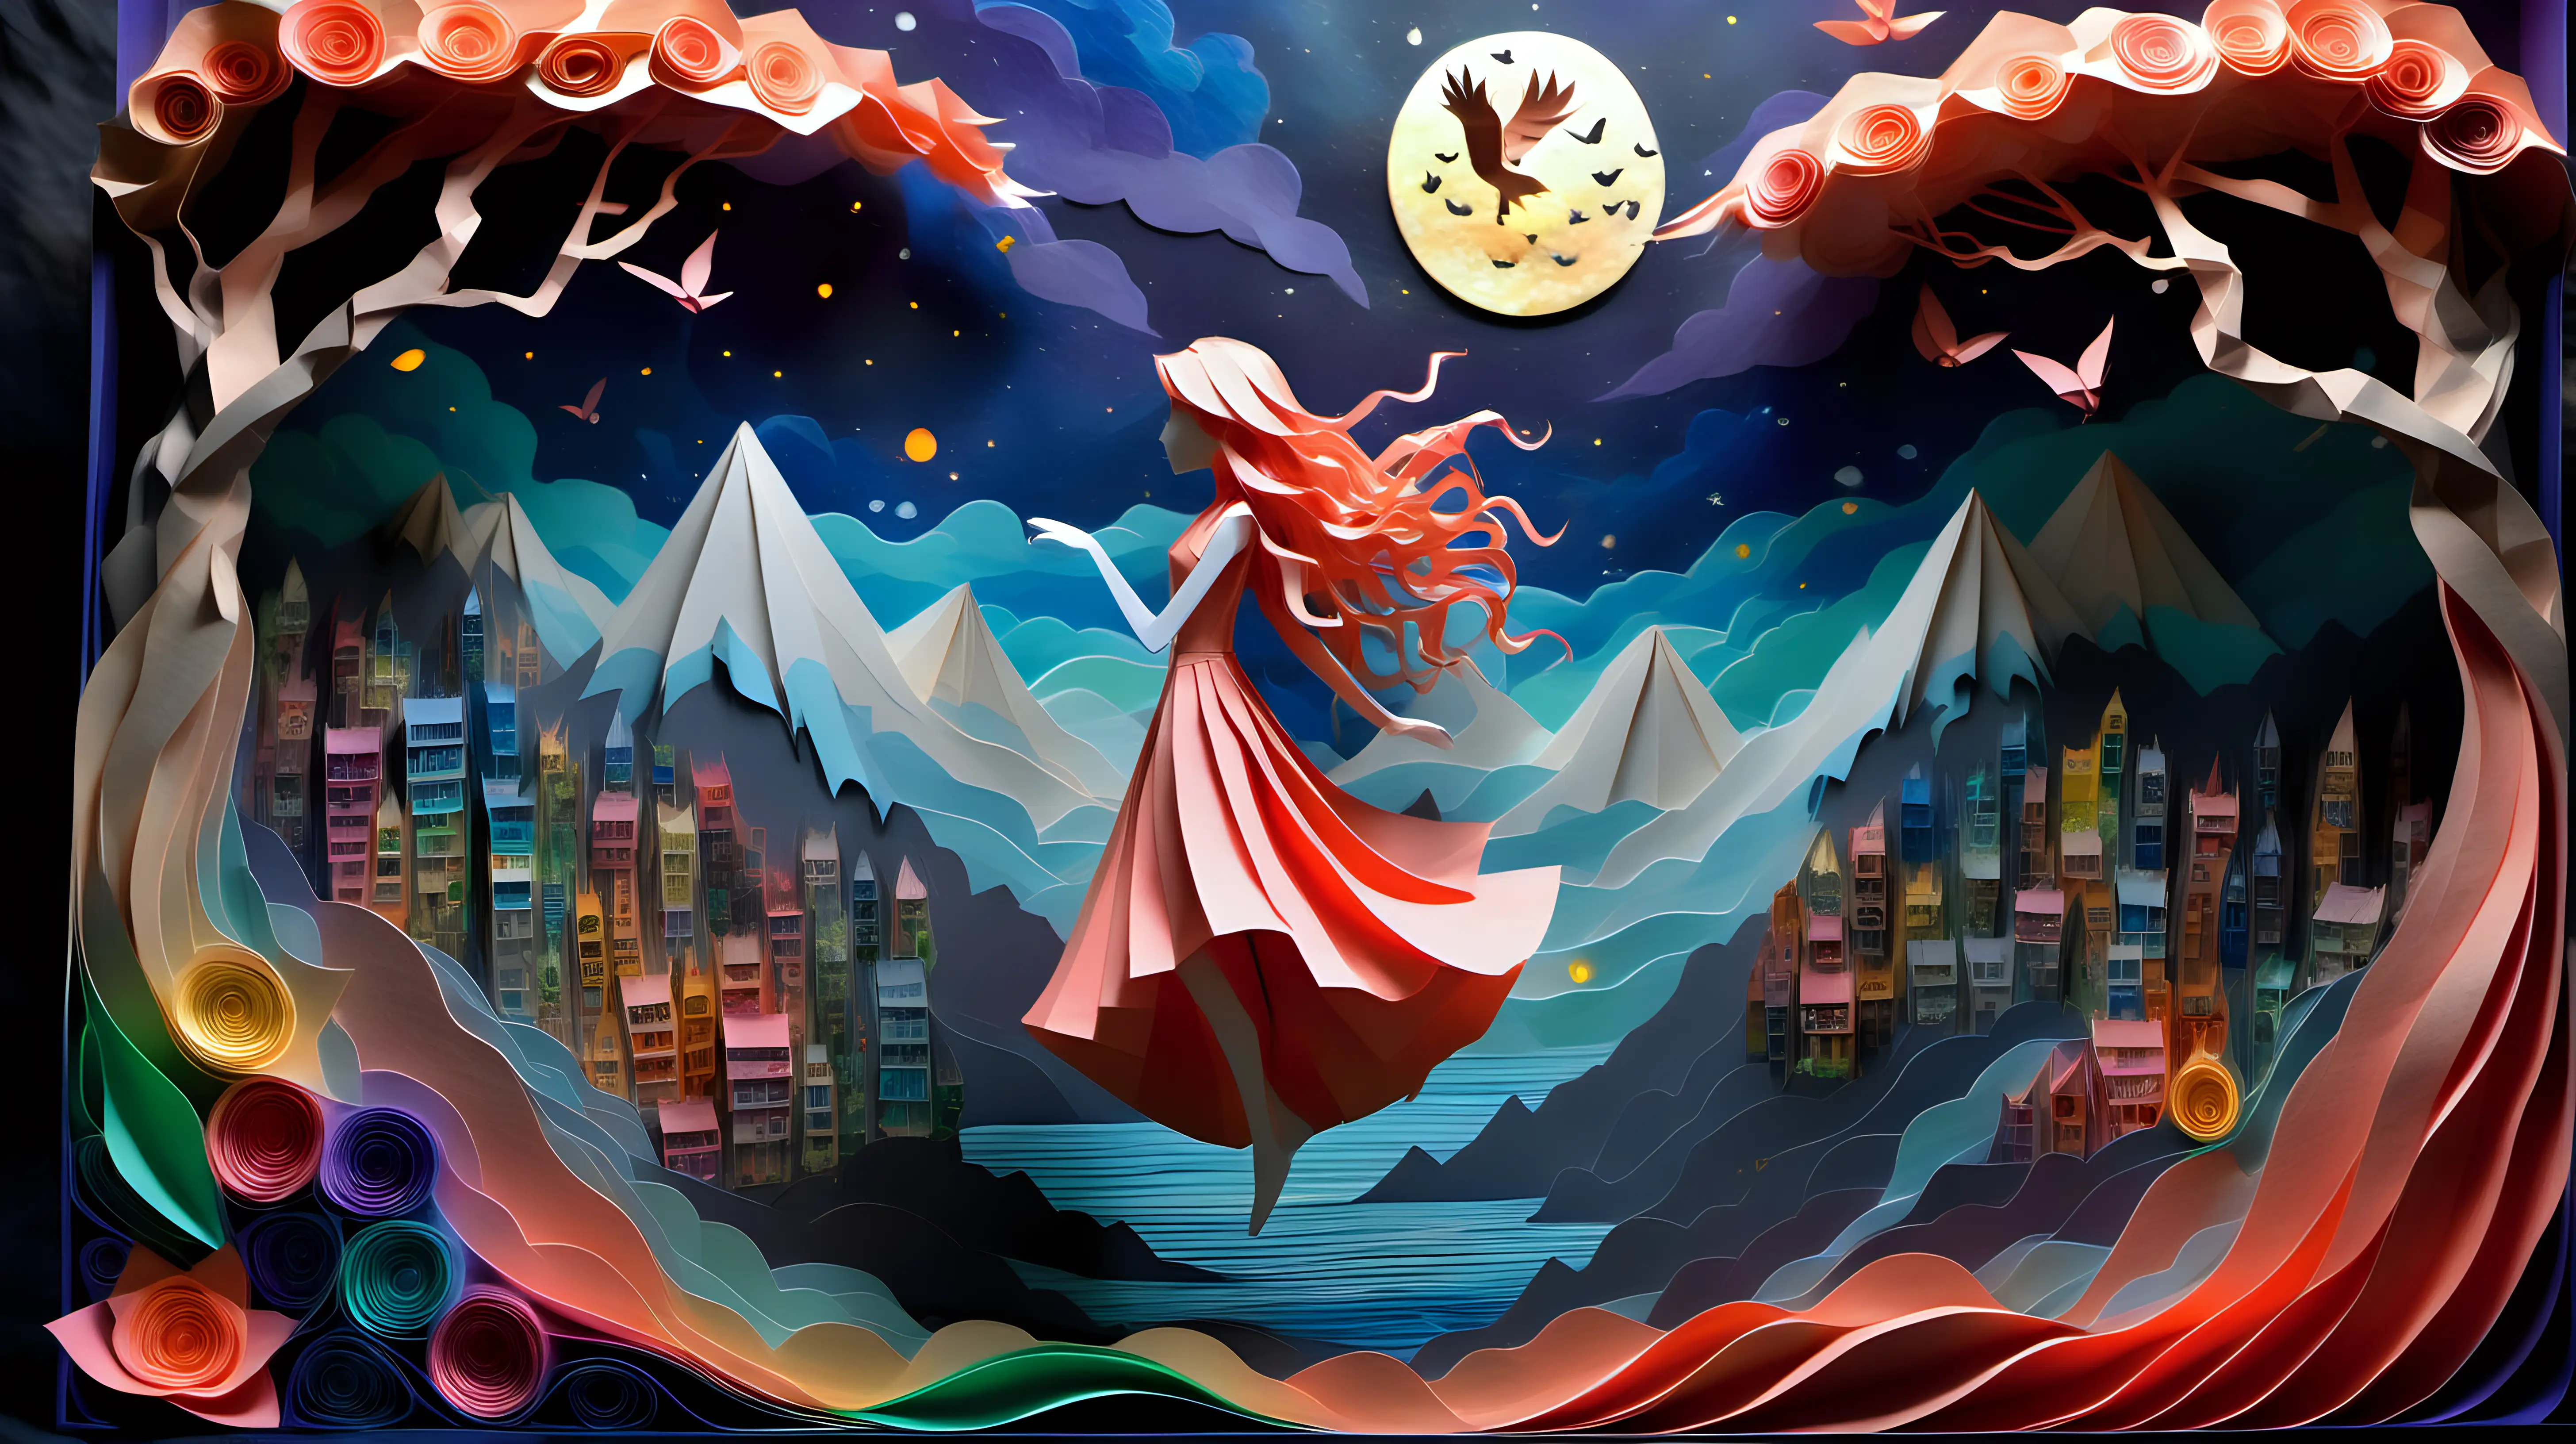 Enchanting Owl Princess in GhibliInspired DIORAMA Art